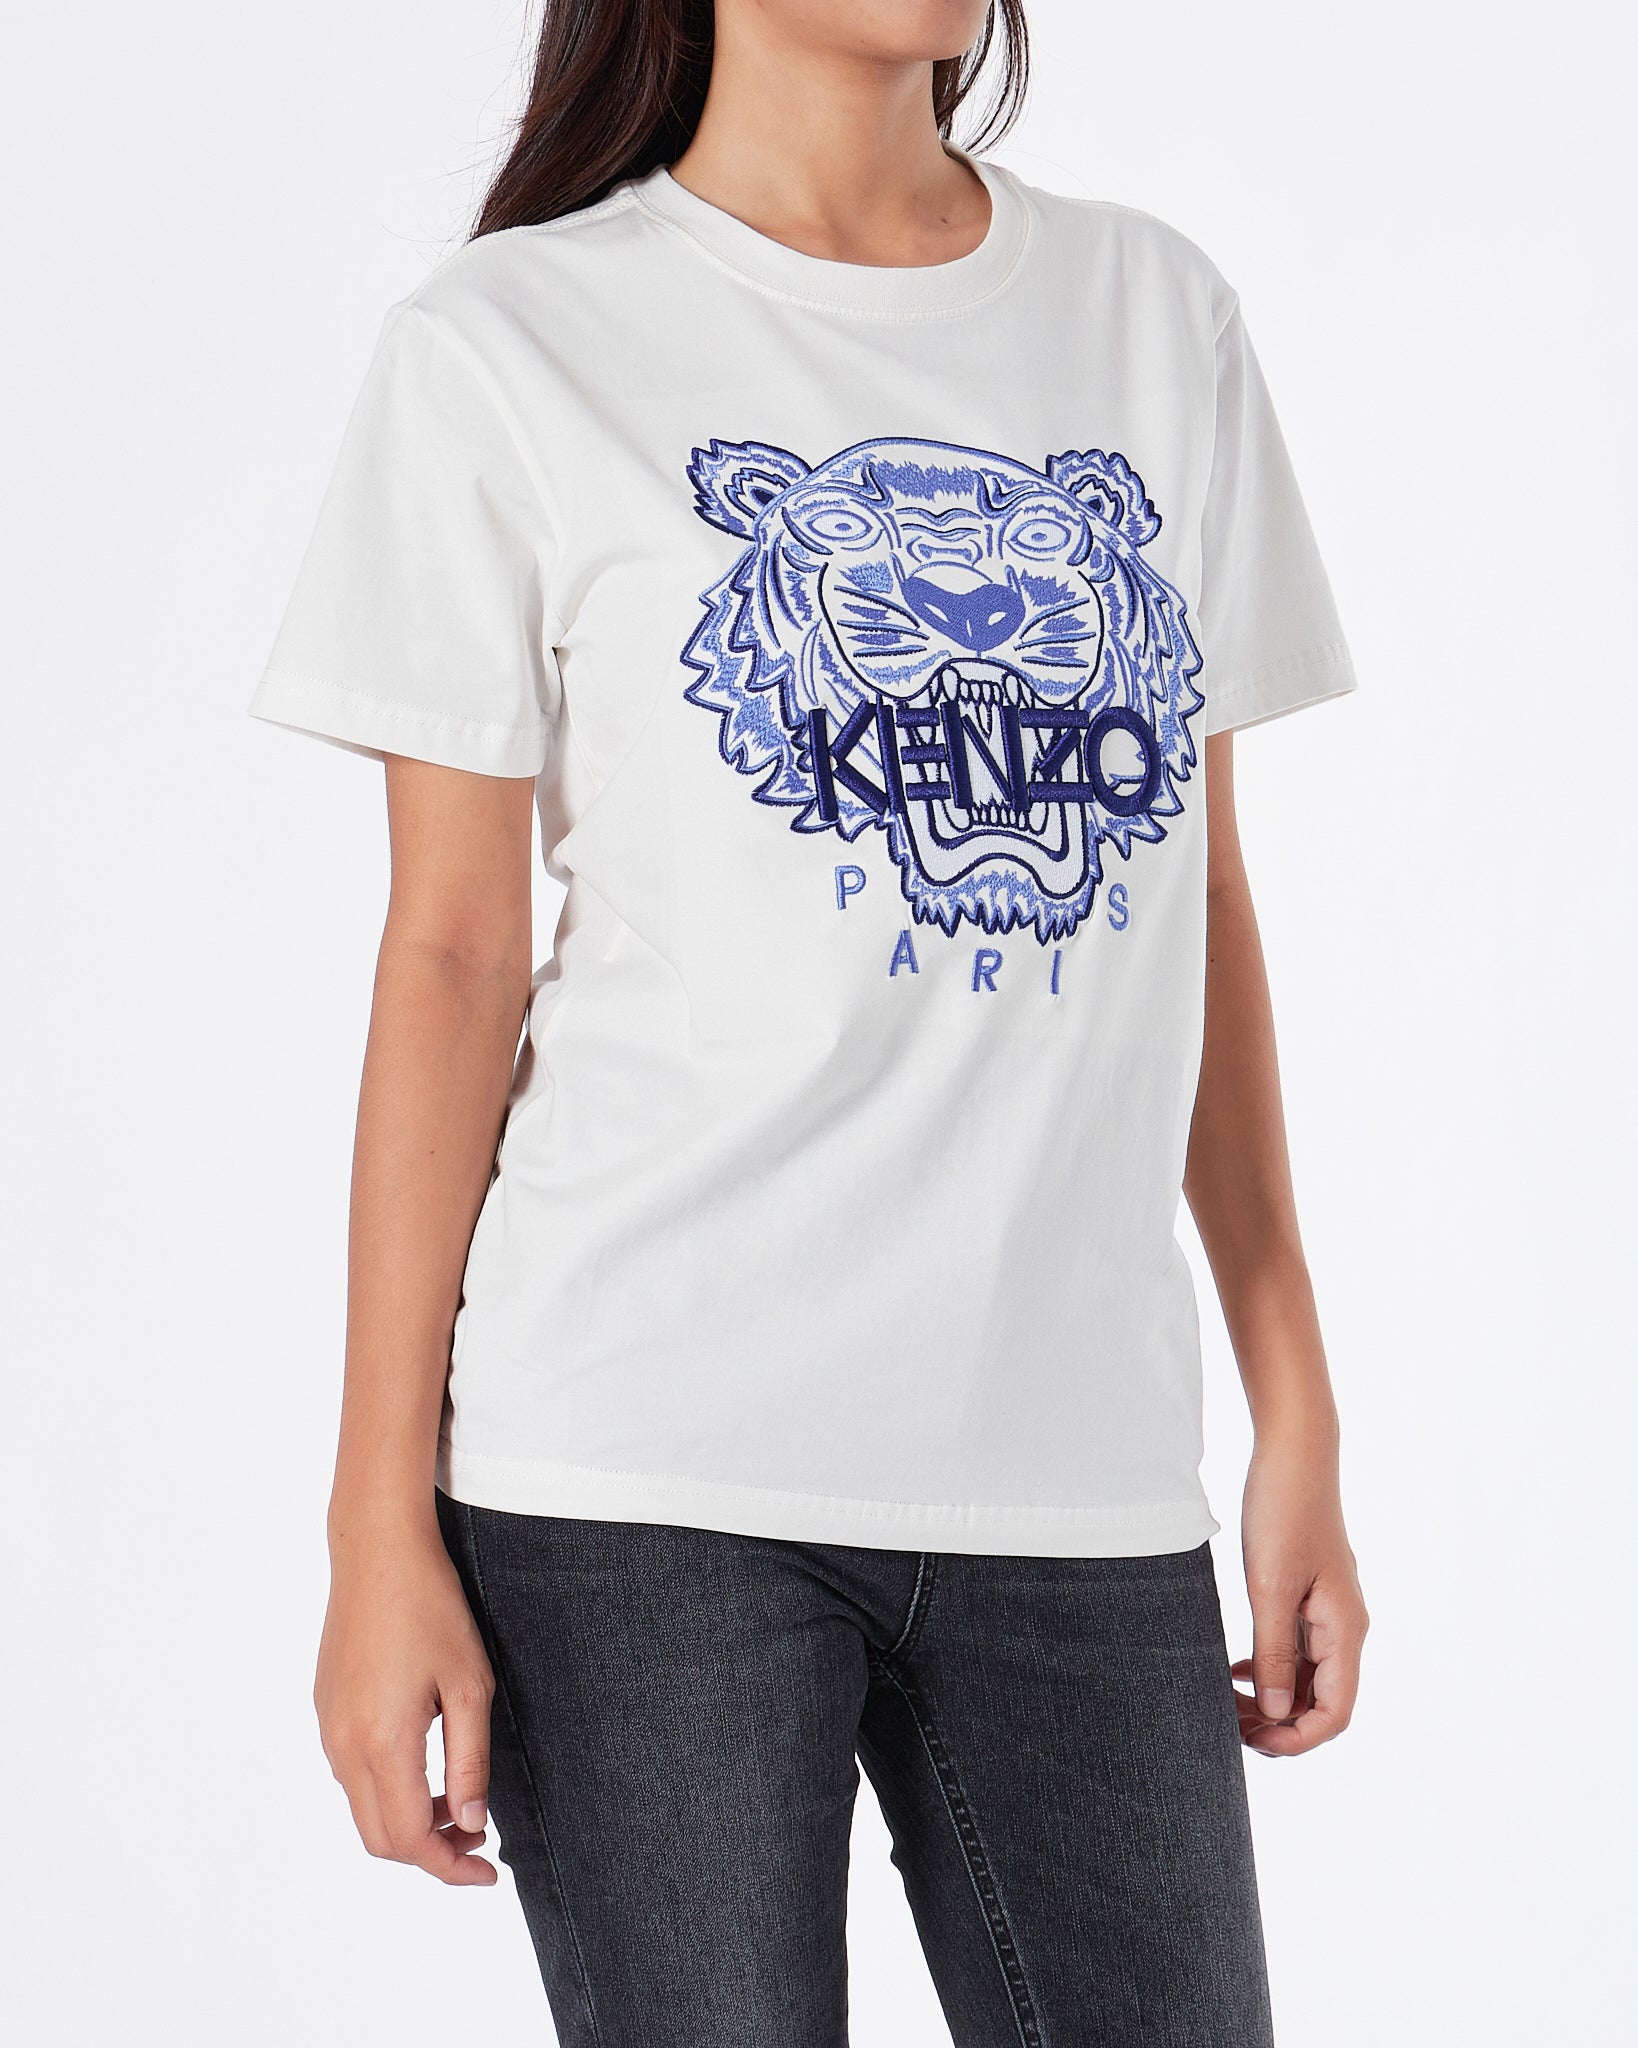 KEN Tiger Head Blue Embroidered Unisex White T-Shirt 23.90